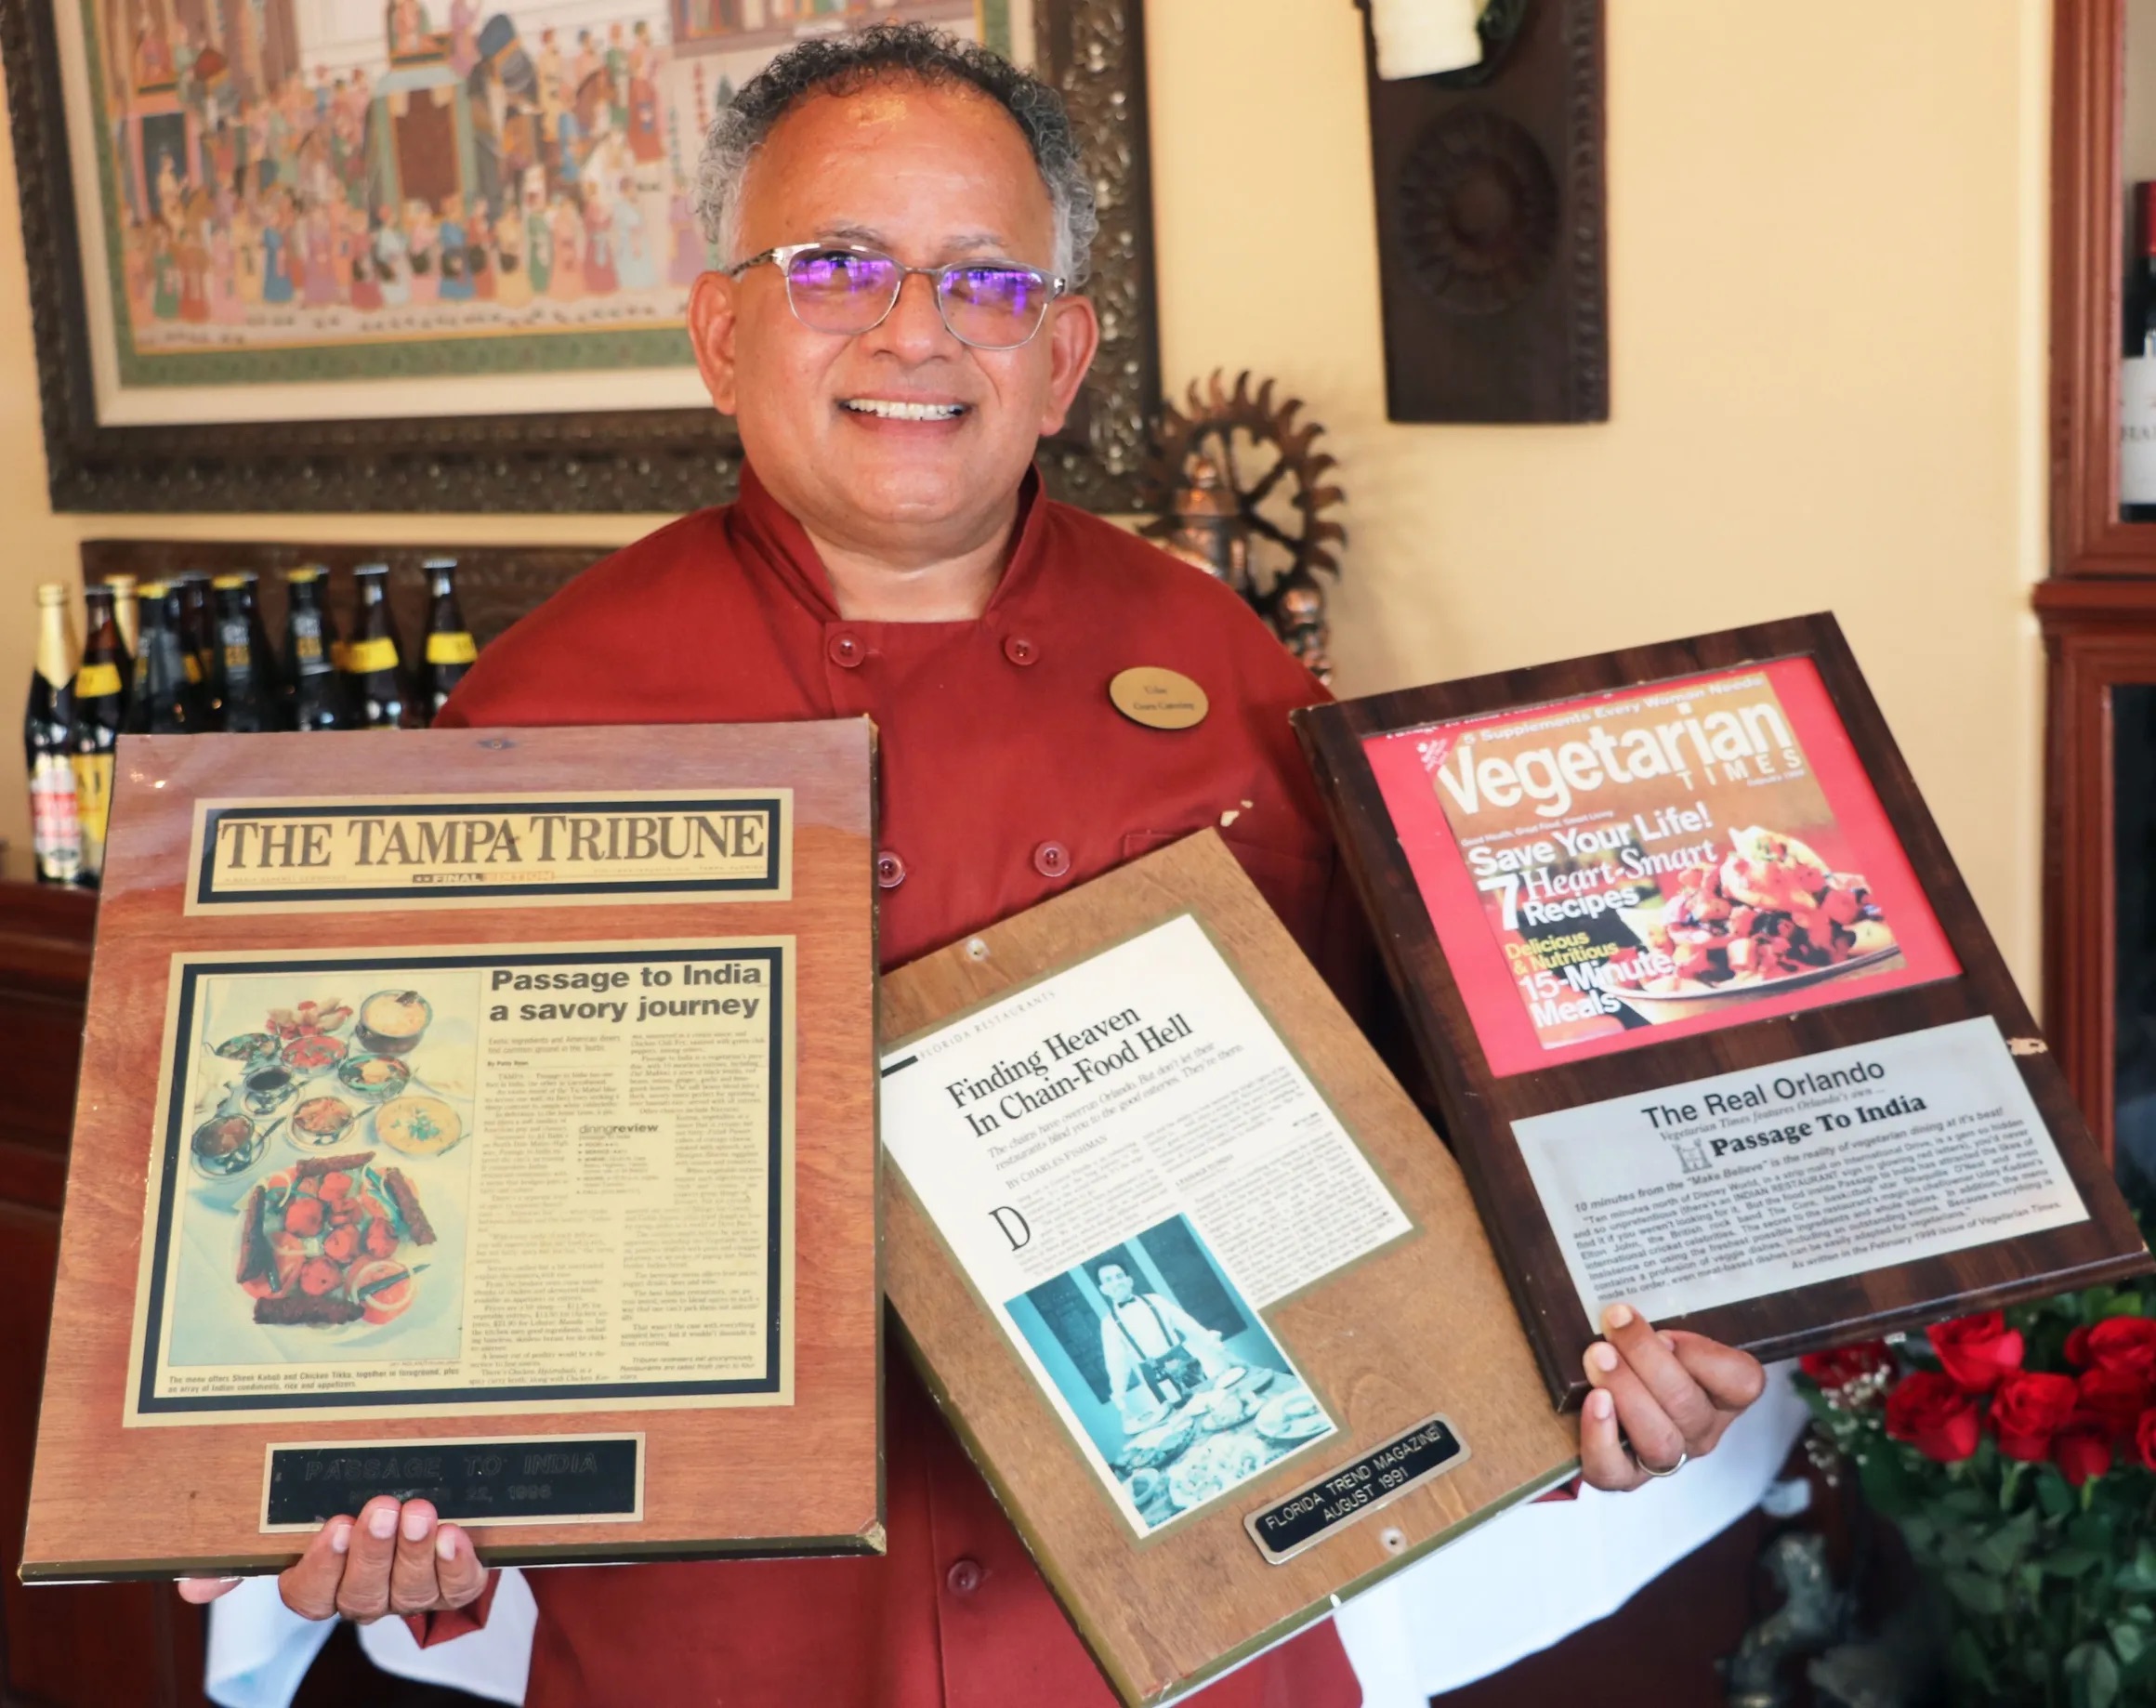 Chef holding awards given to Guru Restaurant